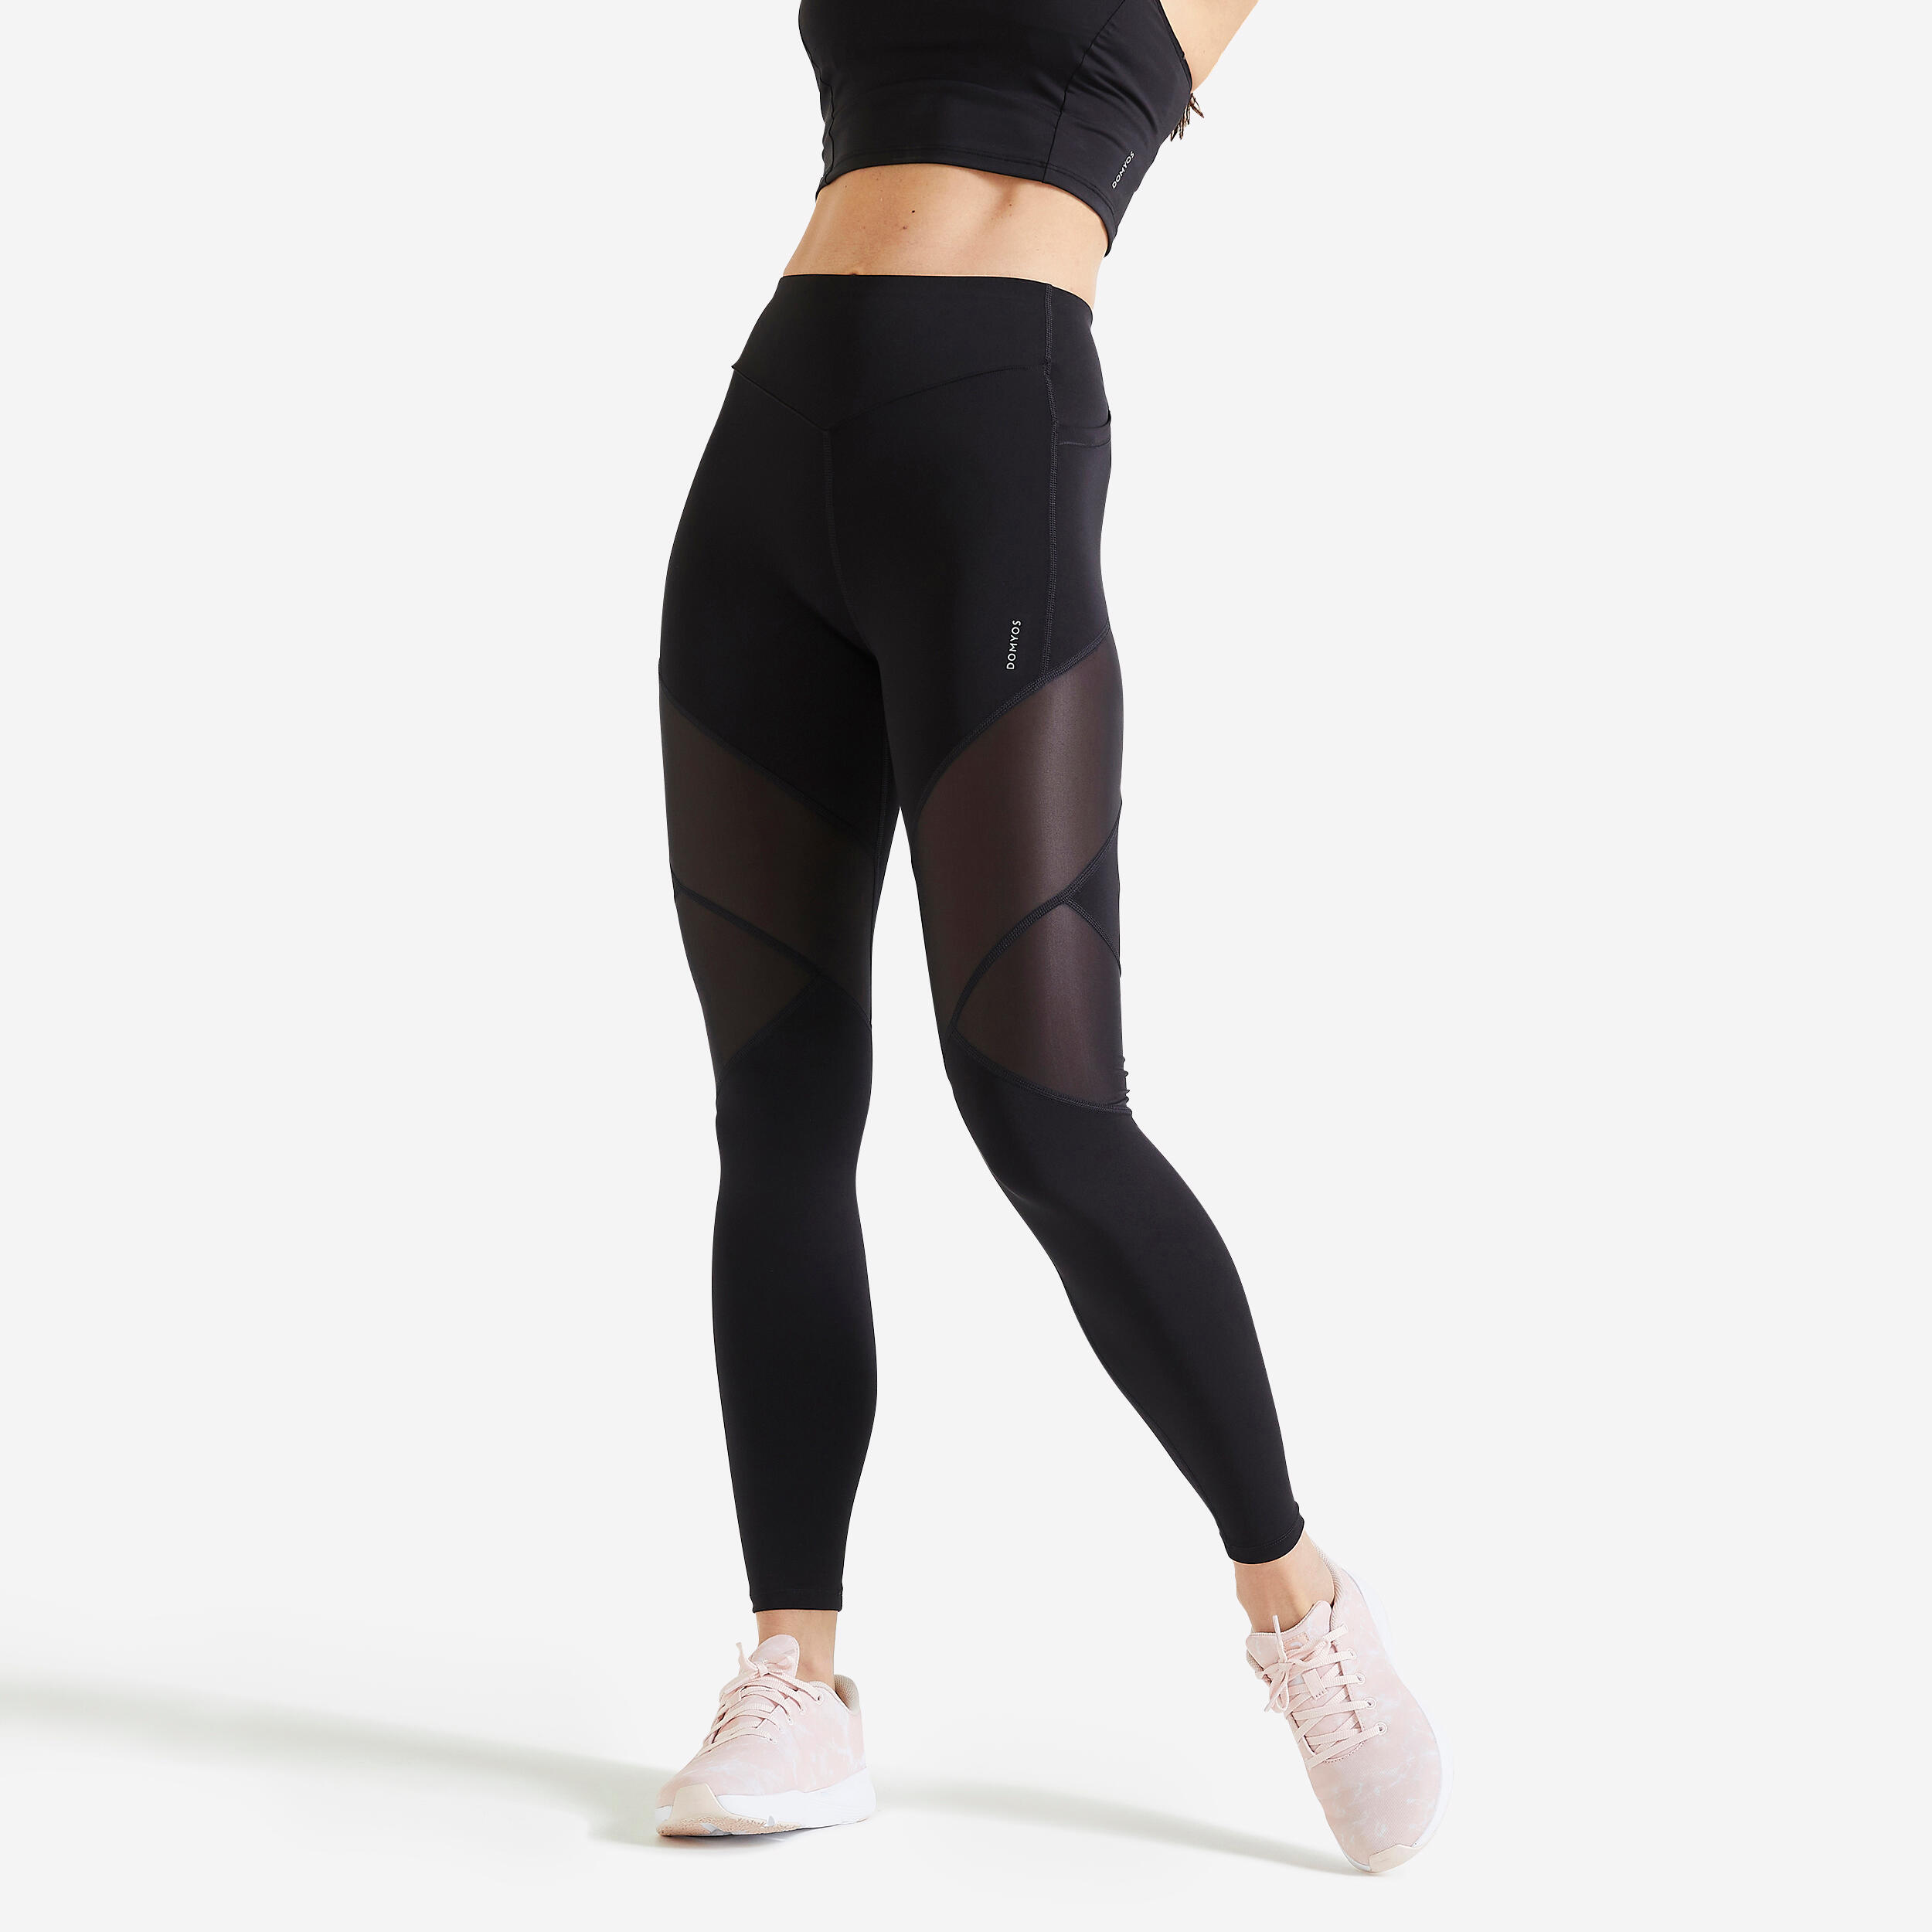 Black Leggings for Women With 5 High Waist, Slimming, Yoga Pants